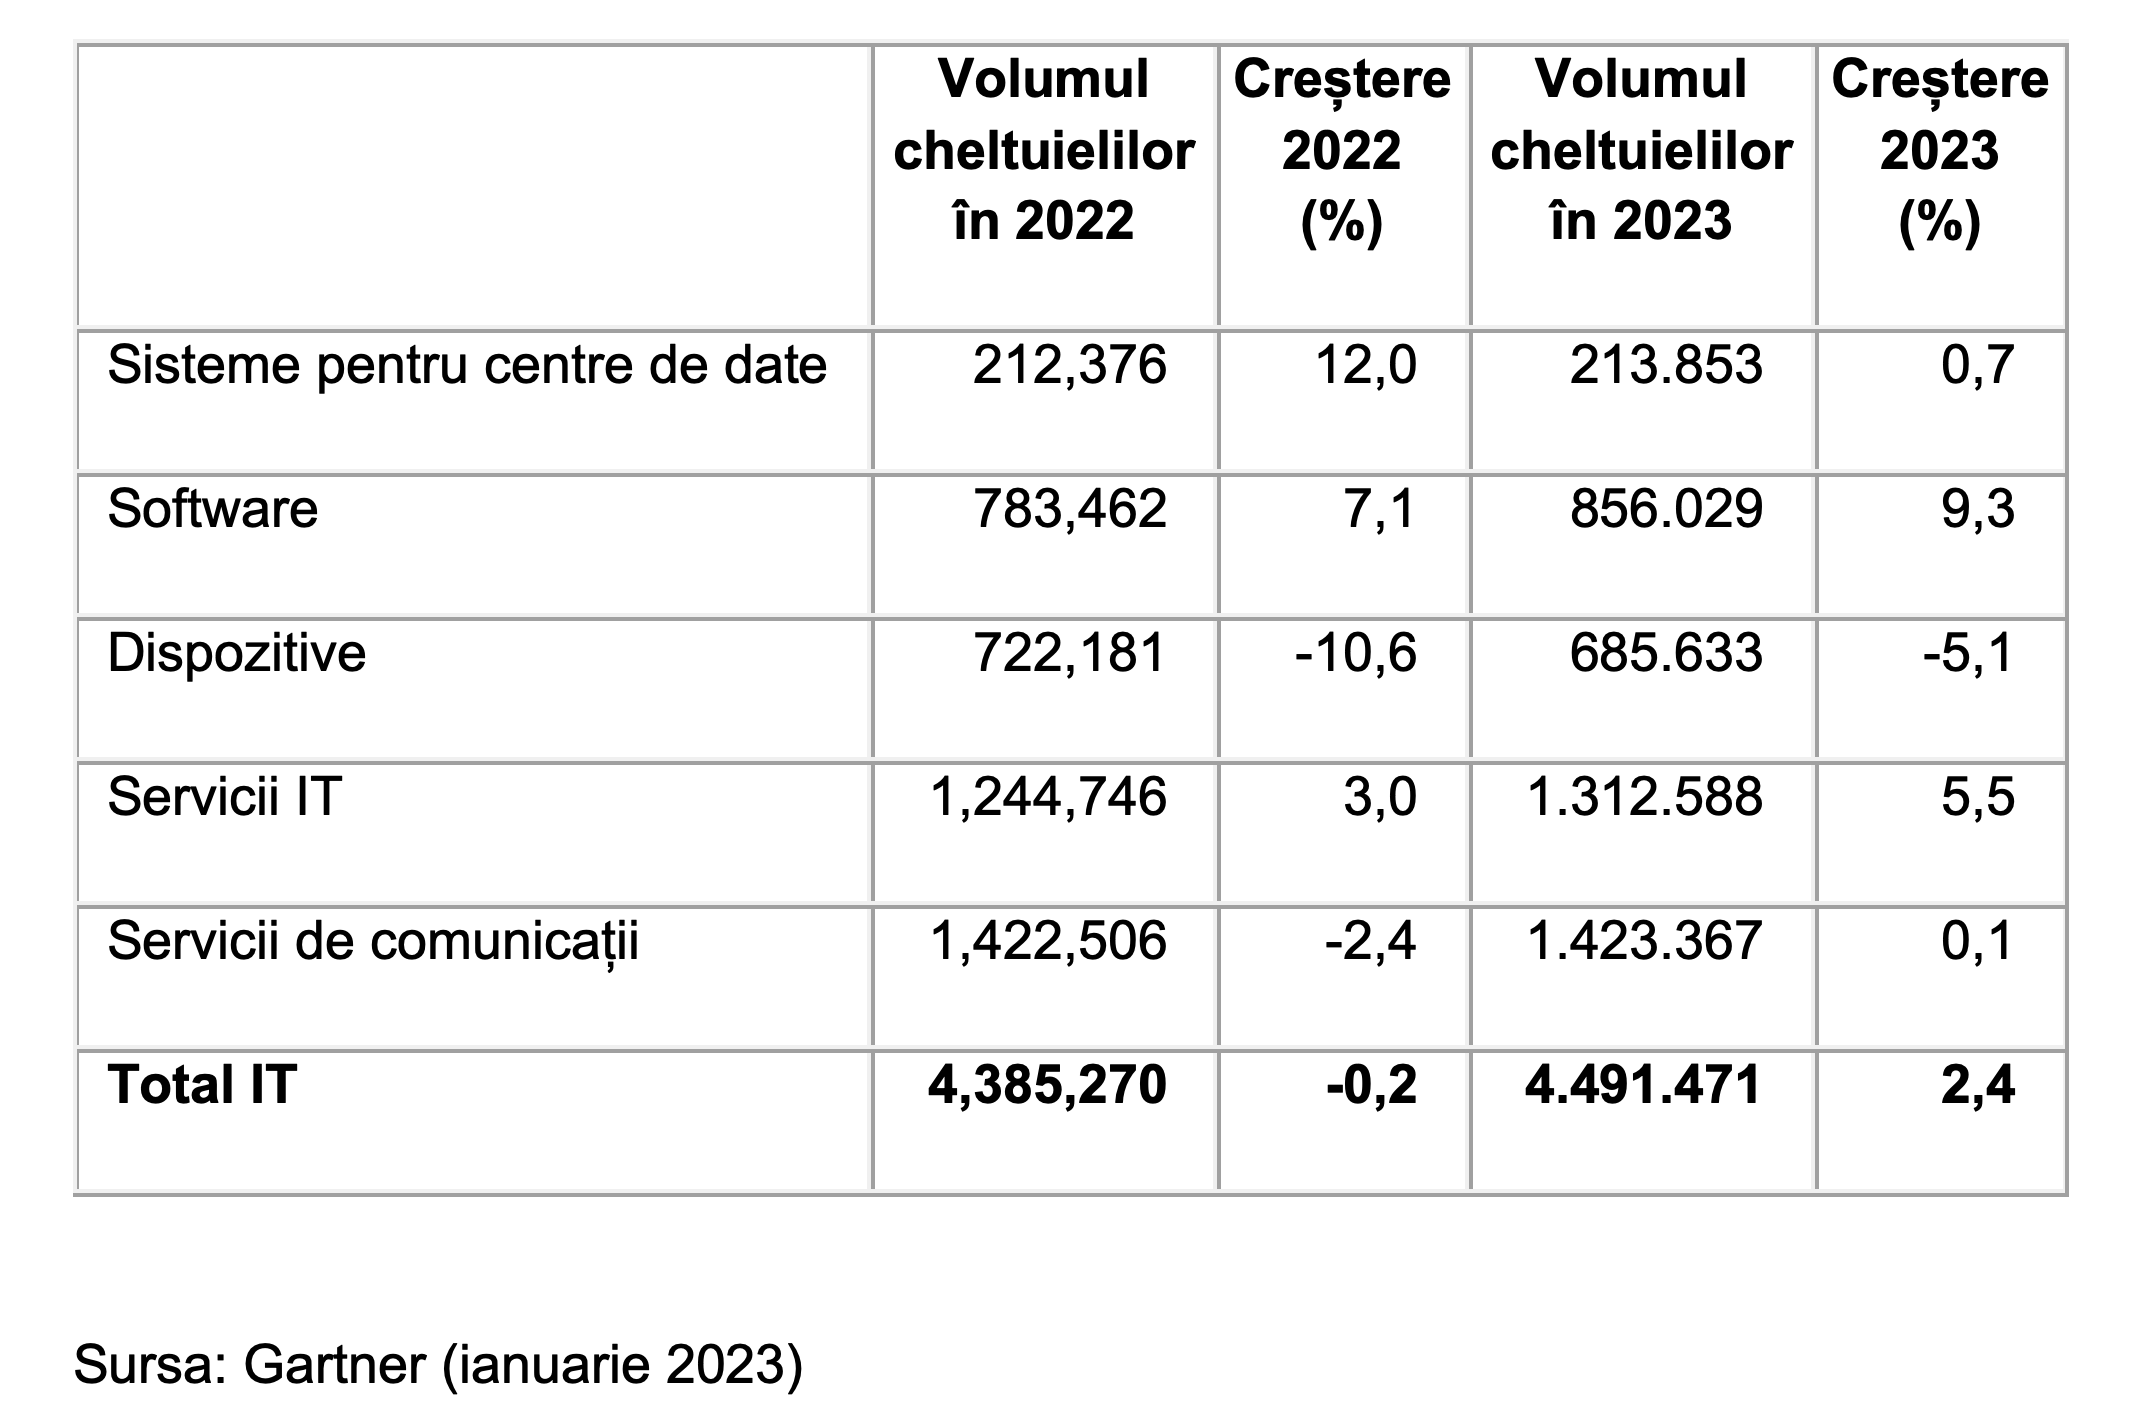 Gartner - Volumul cheltuielilor IT la nivel mondial estimat 2023